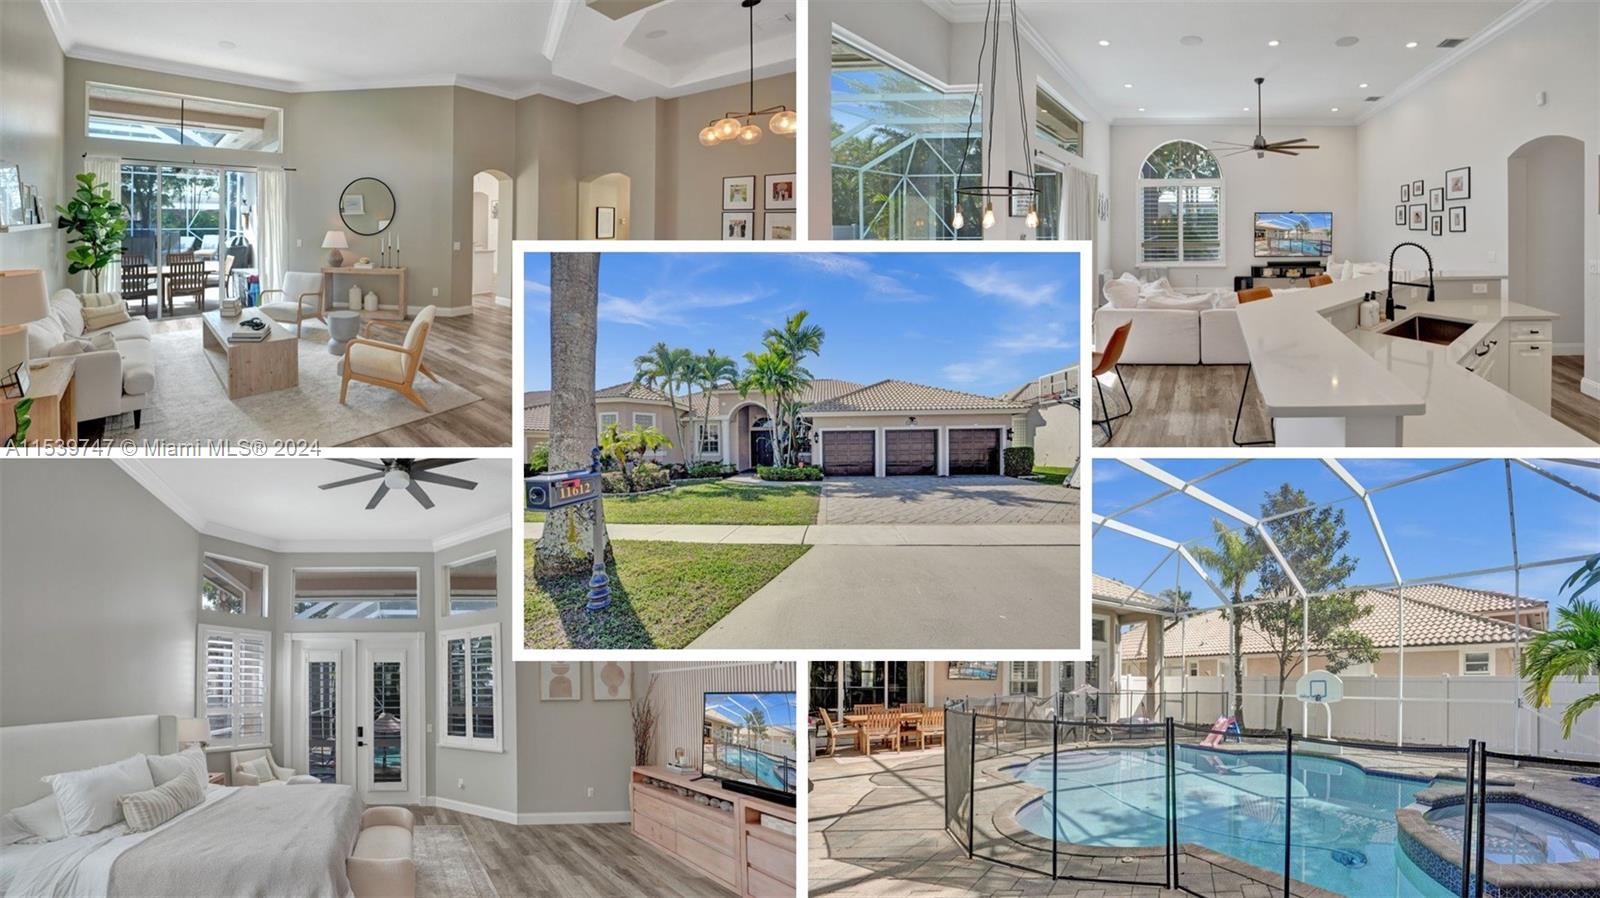 Property for Sale at 11612 Kensington Ct Ct, Boca Raton, Broward County, Florida - Bedrooms: 5 
Bathrooms: 3  - $1,178,000